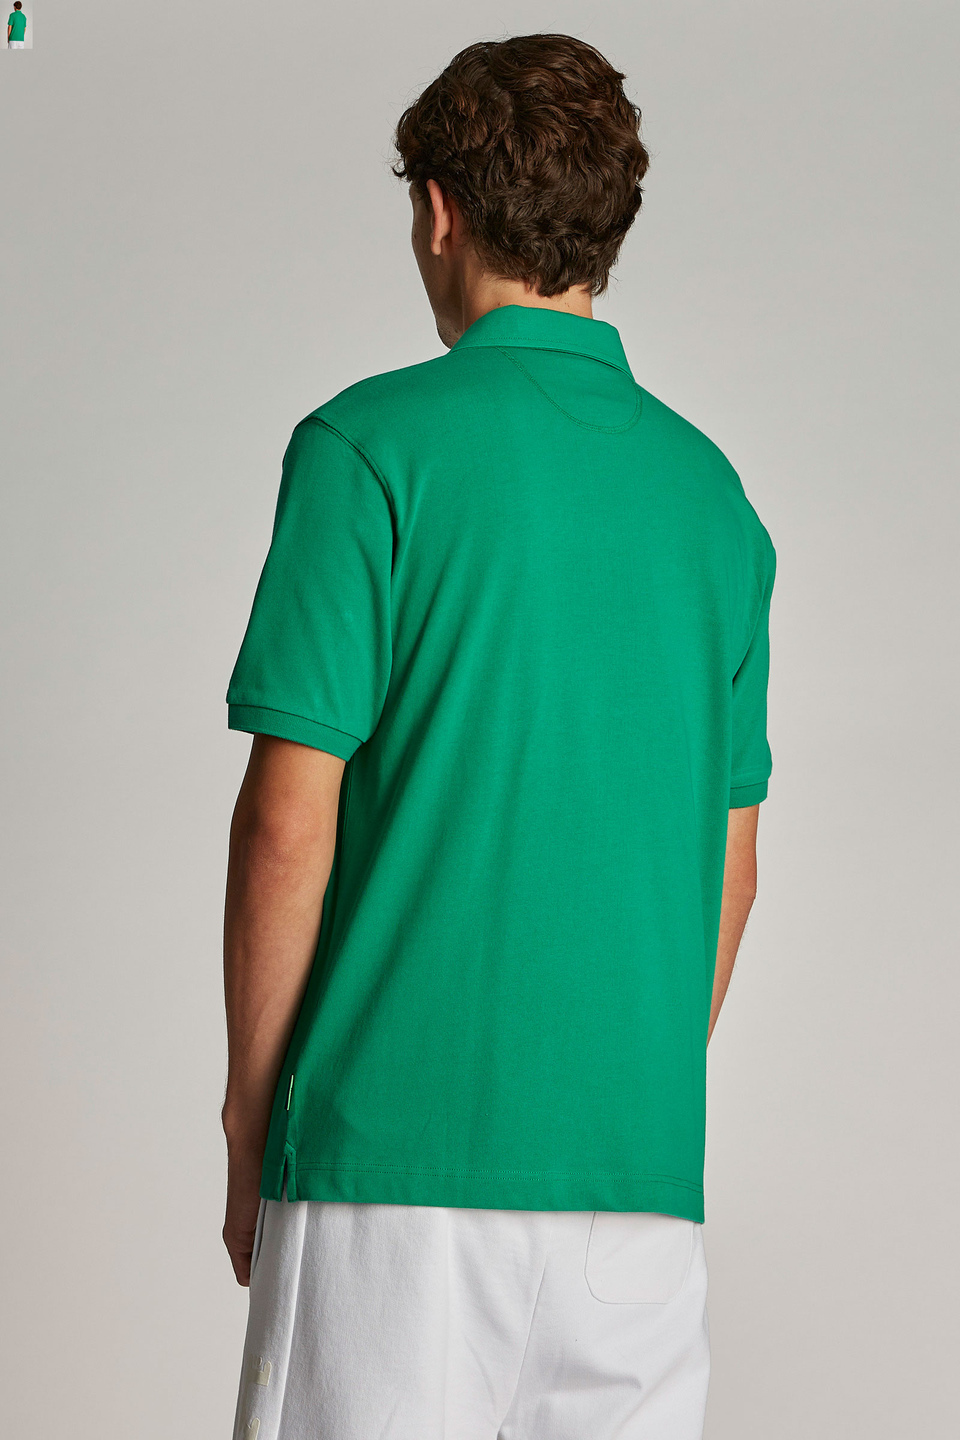 Herren-Poloshirt mit kurzem Arm, oversized Modell | La Martina - Official Online Shop